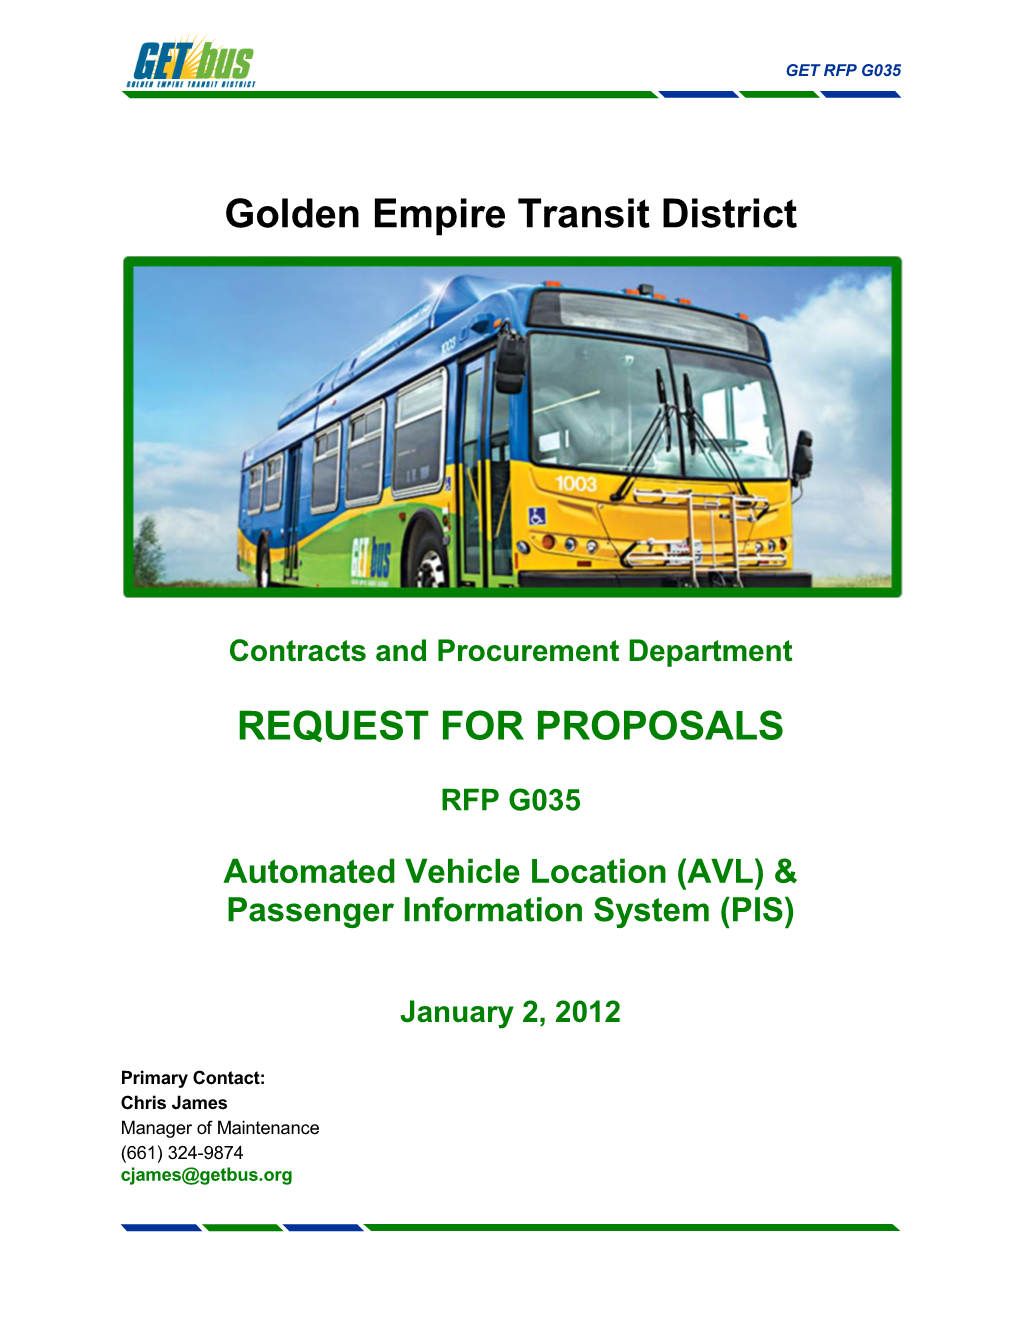 Golden Empire Transit District REQUEST for PROPOSALS